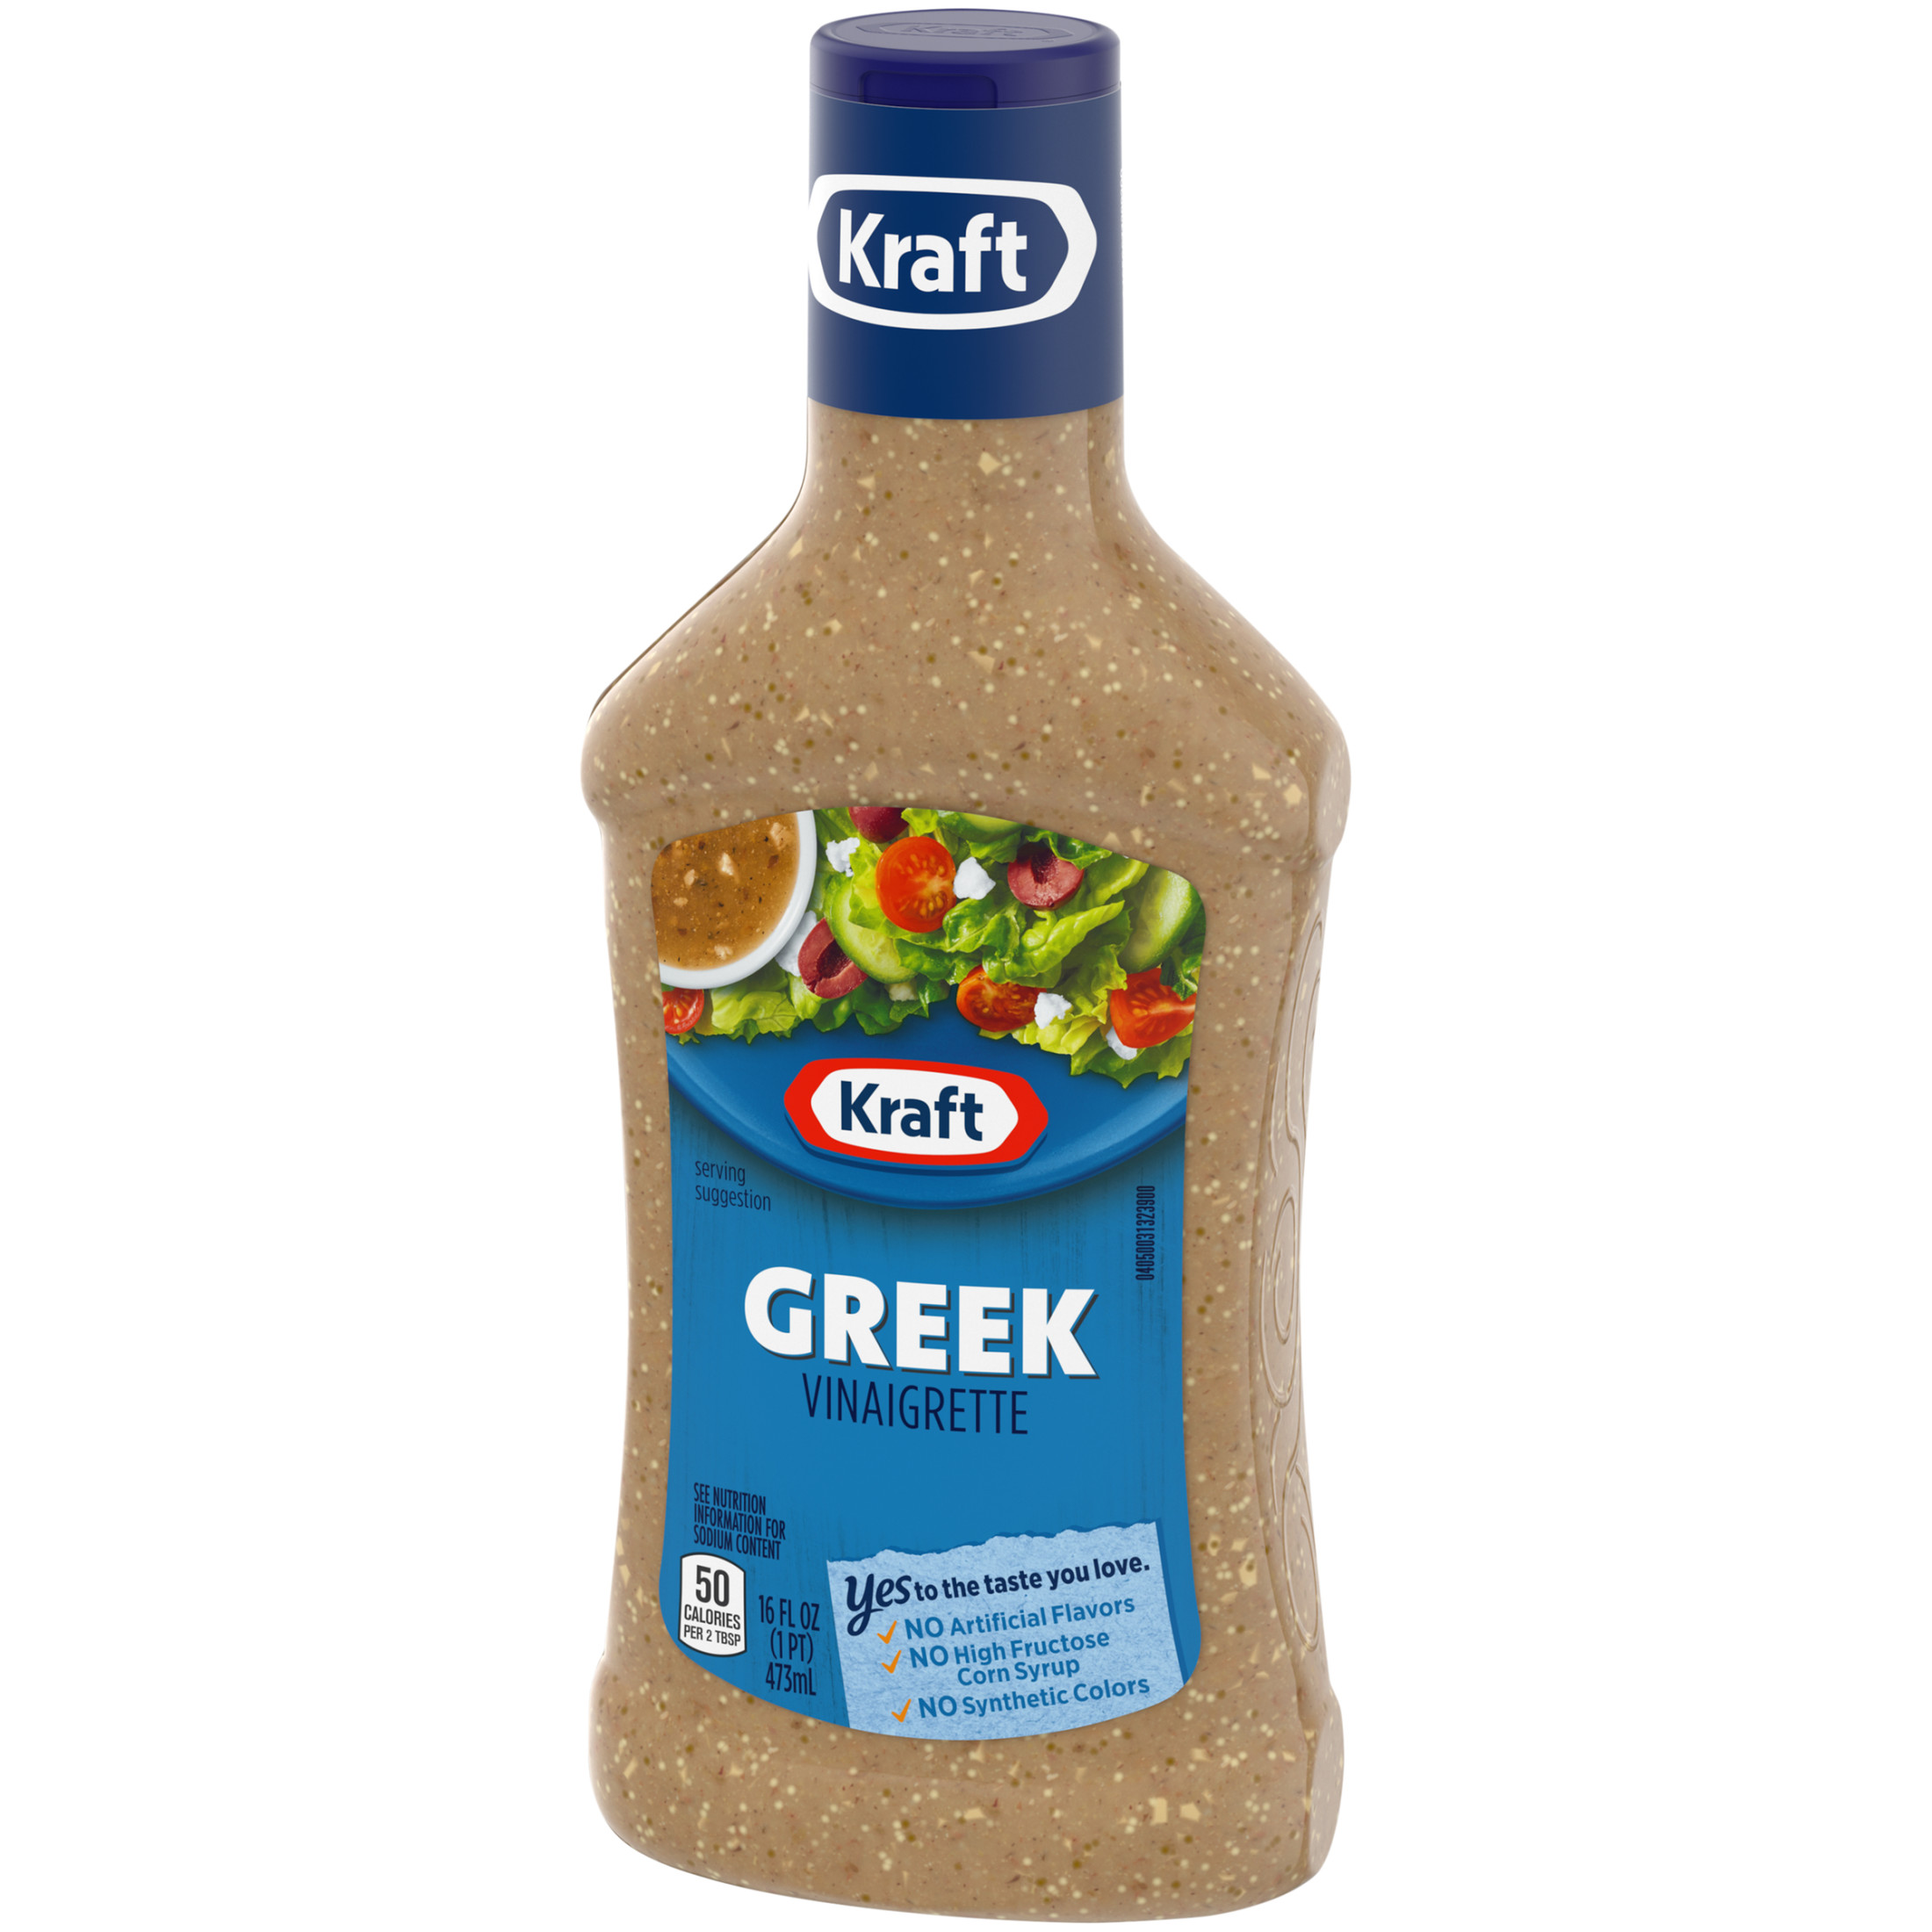 Kraft Greek Vinaigrette Salad Dressing, 16 fl oz Bottle - image 4 of 6